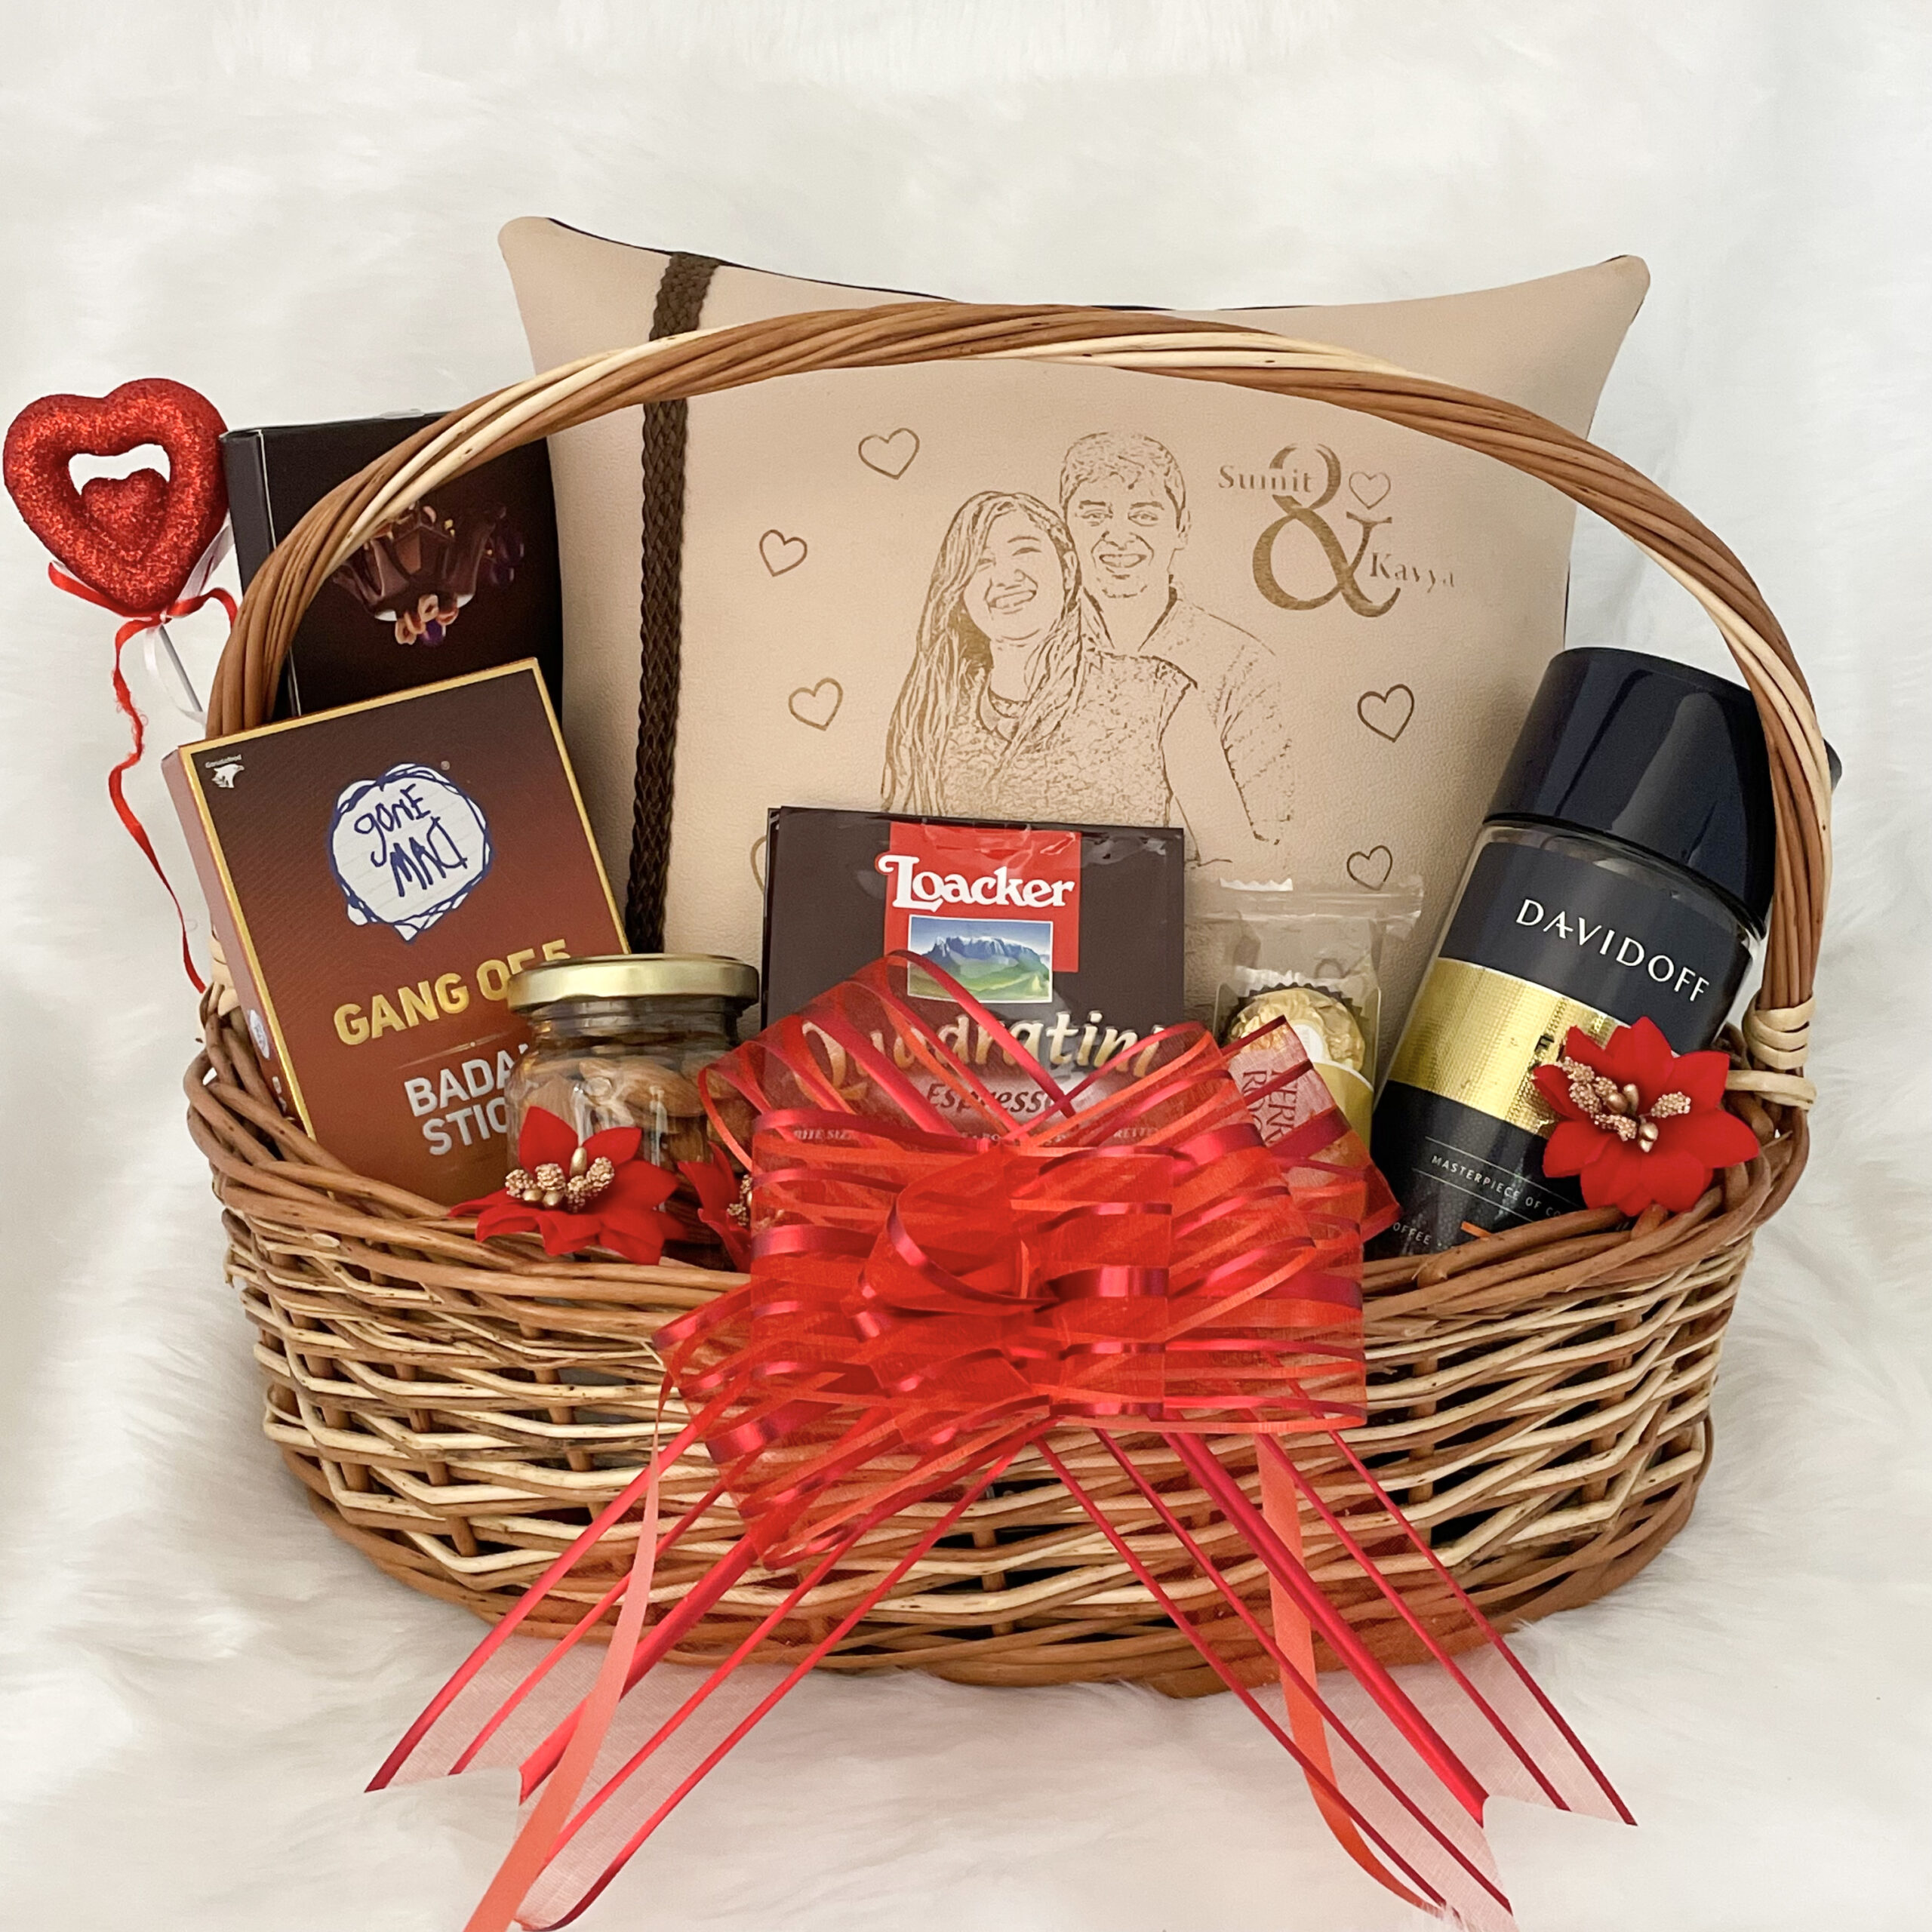 Send Custom-made Valentines Day Gifts For Boyfriend